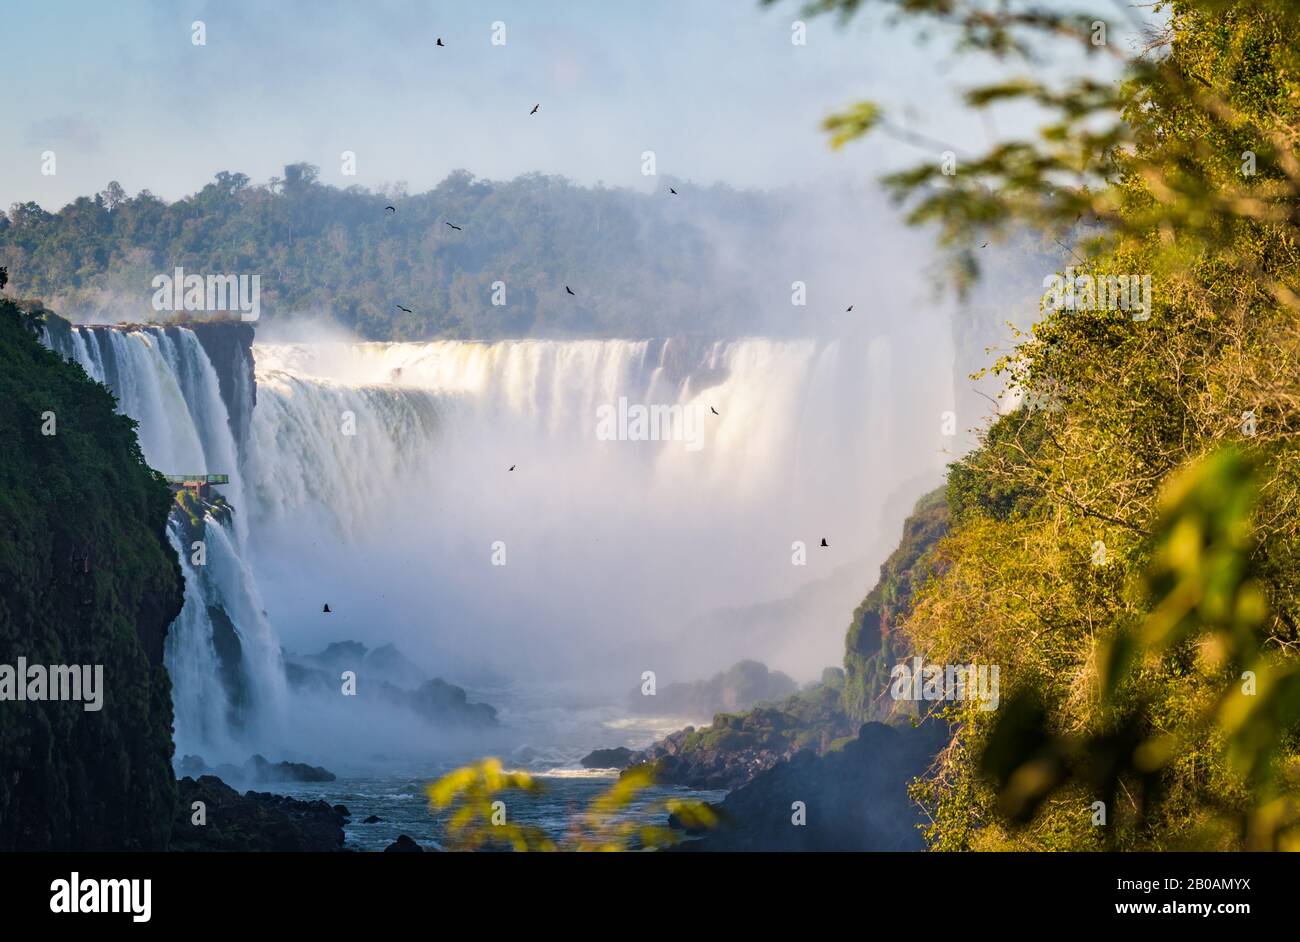 Iguazu falls - cataratas de iguazu Stock Photo